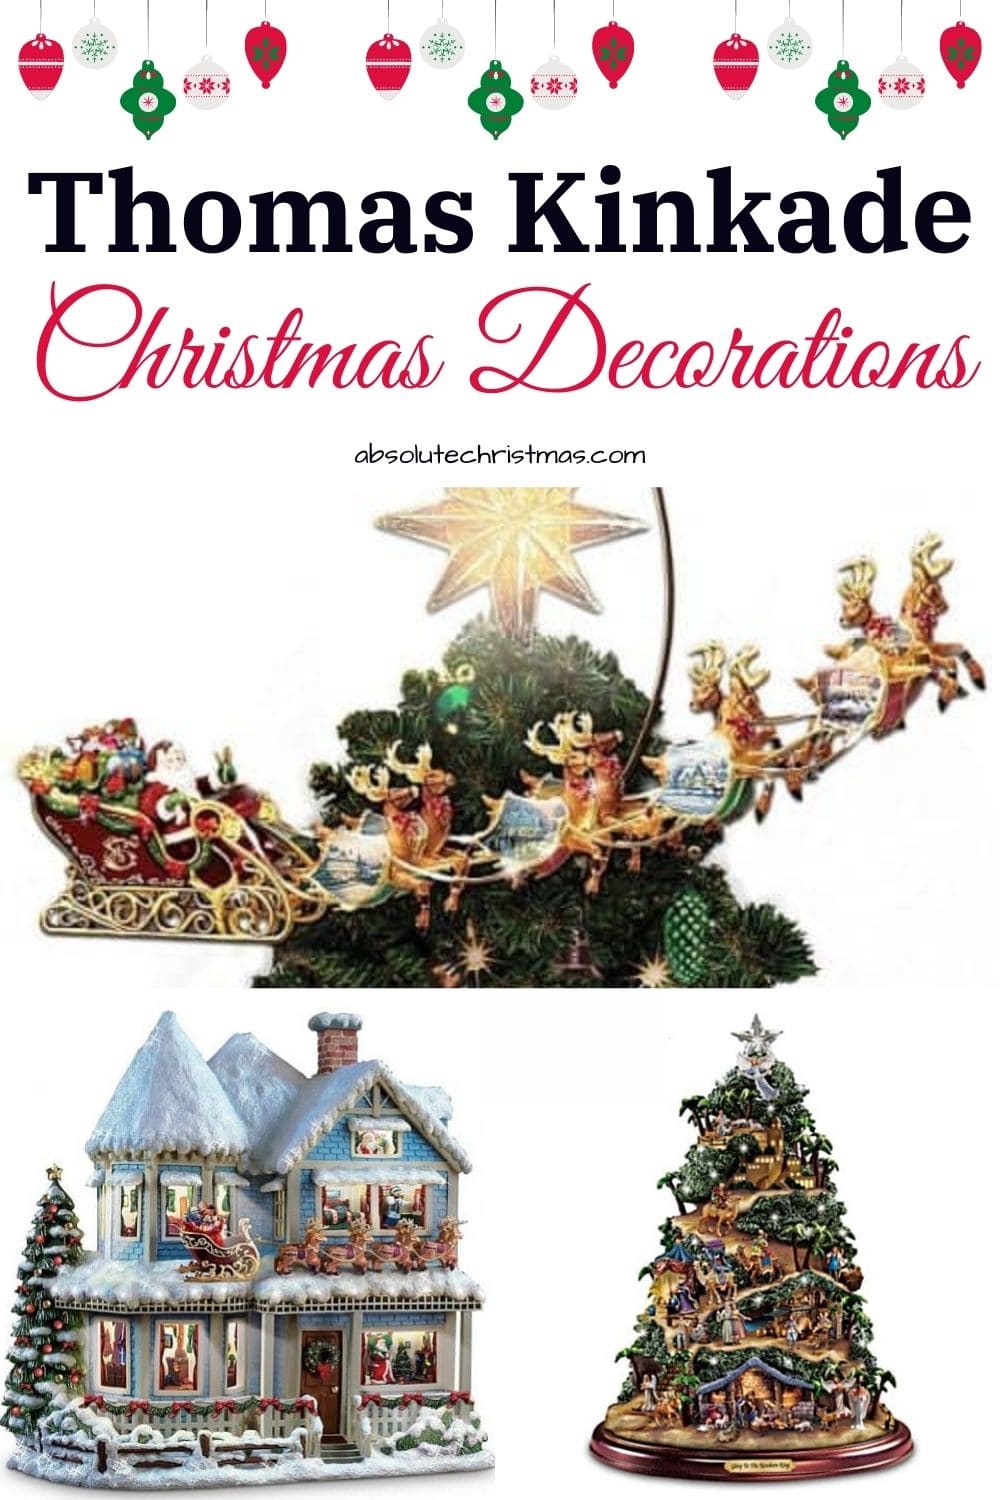 Thomas Kinkade Christmas Decorations